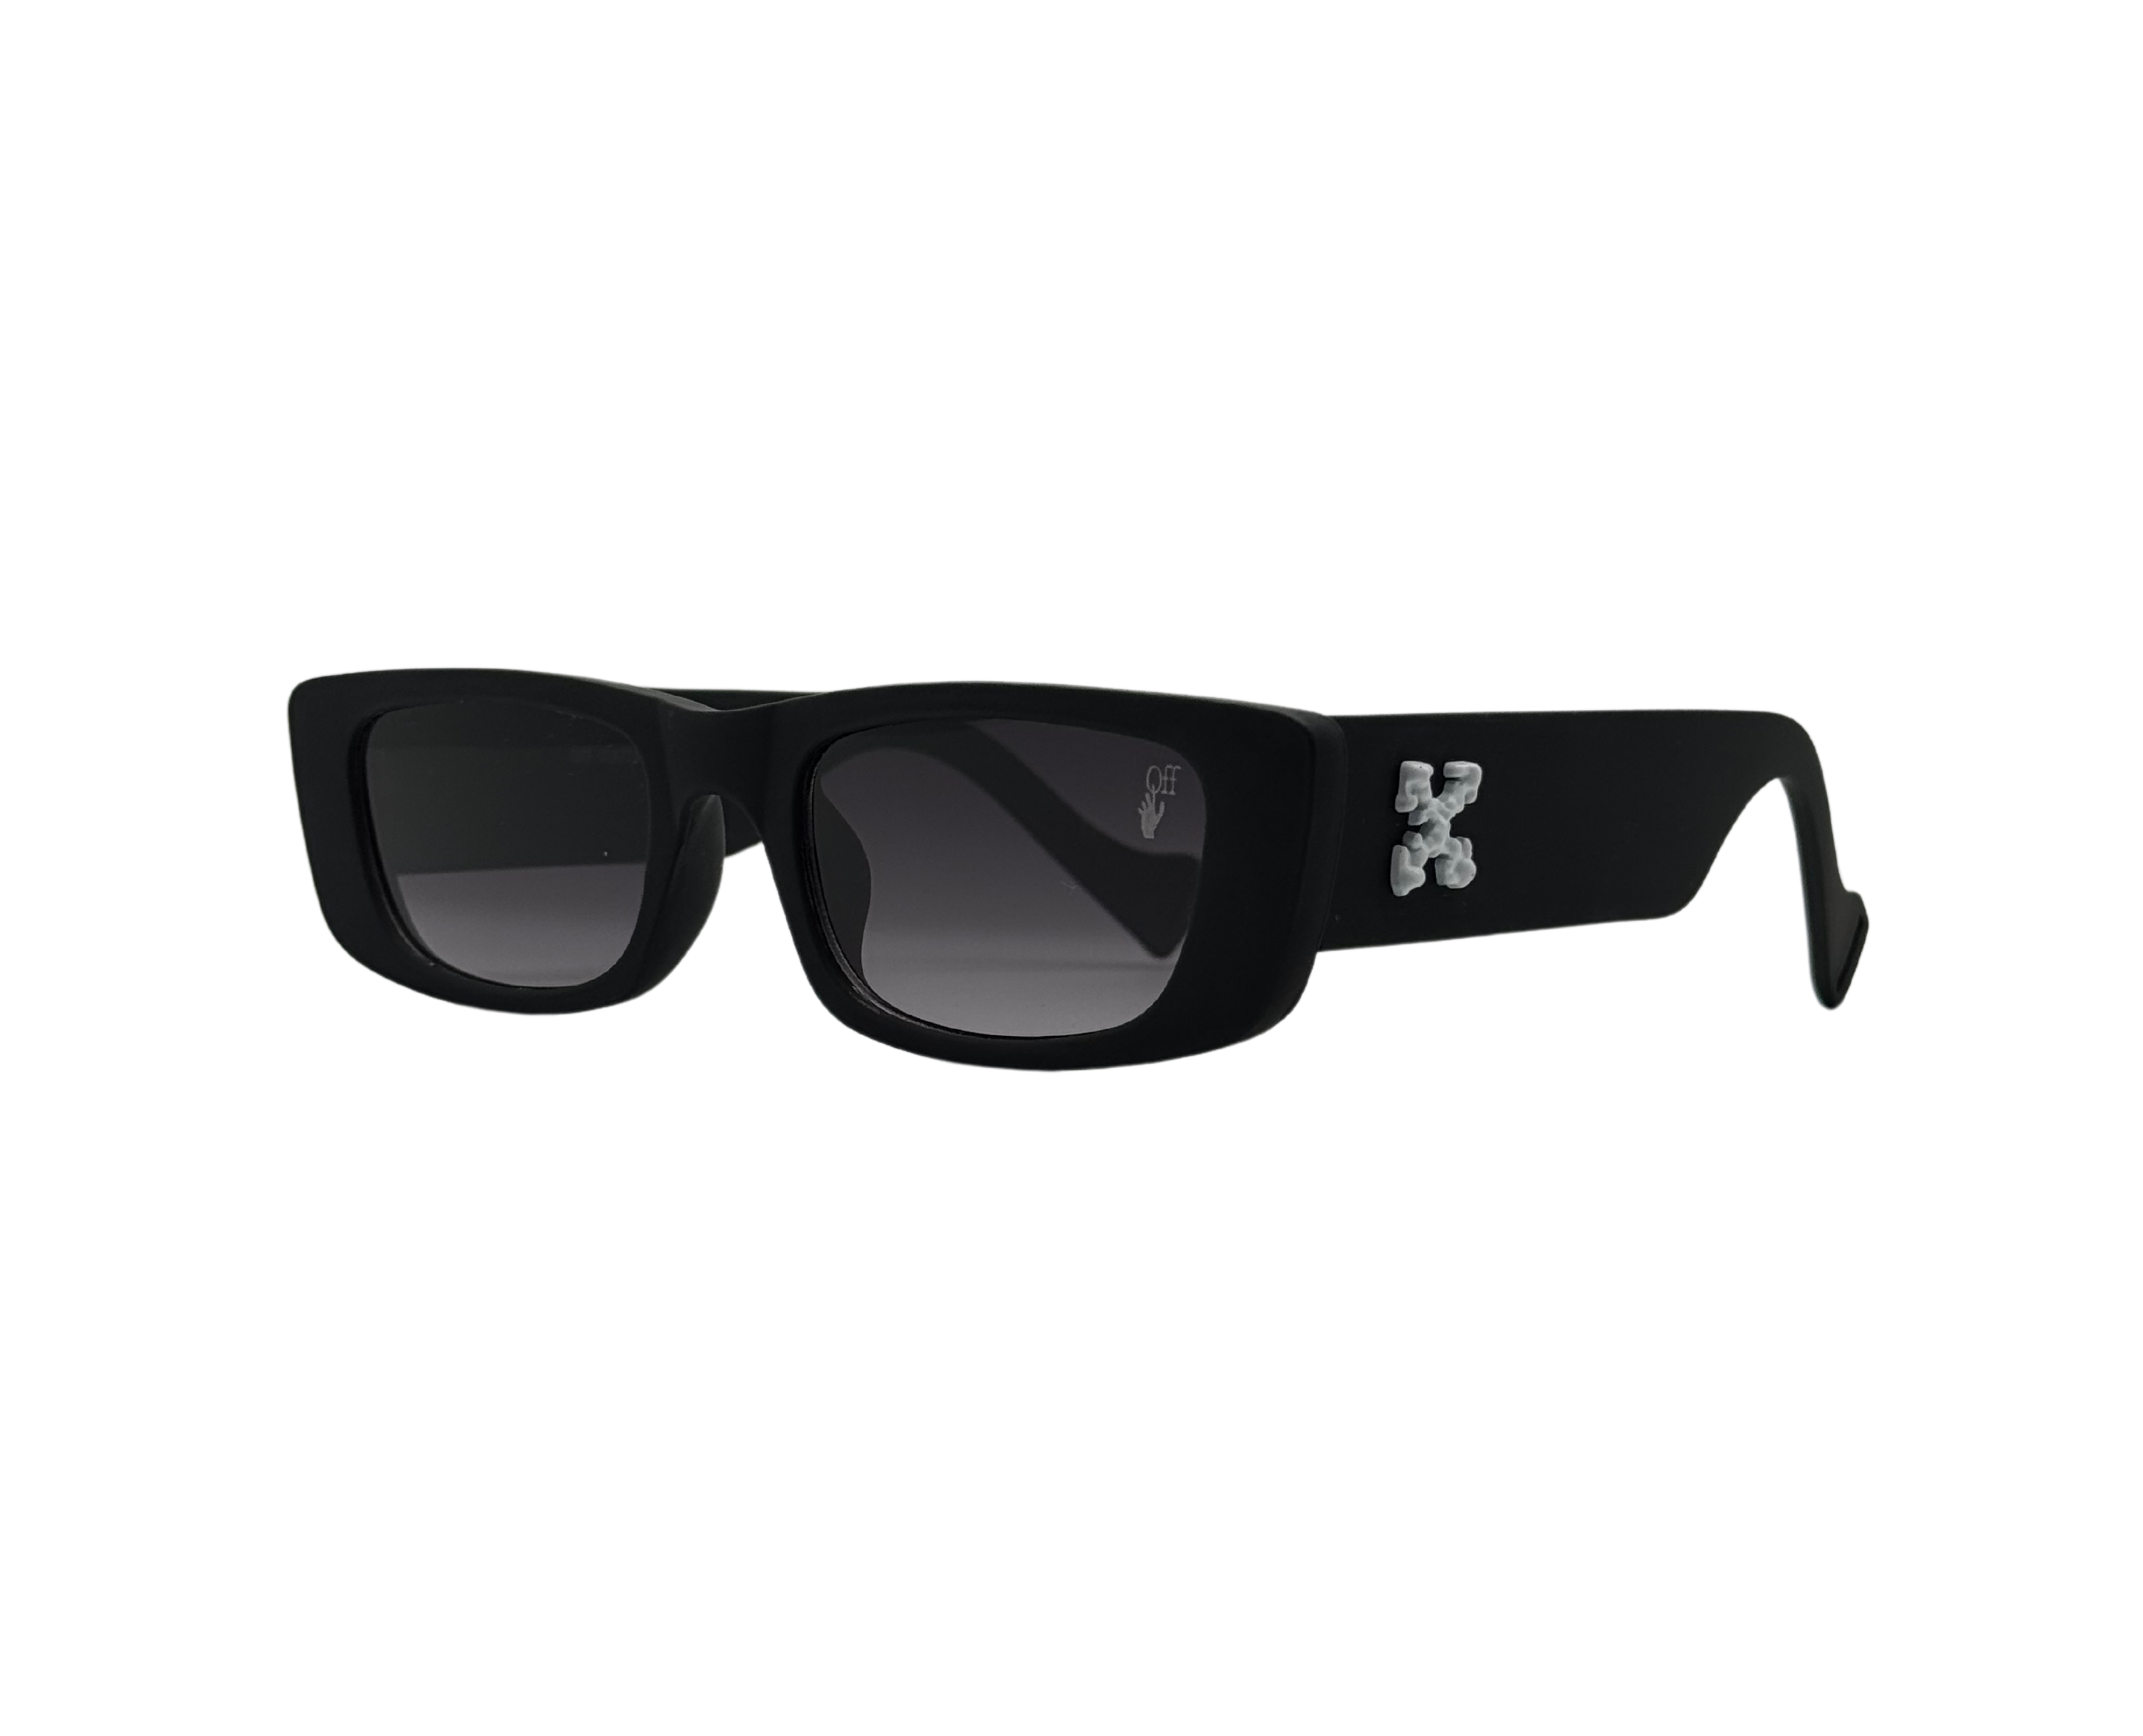 NS Deluxe - 0201 - Black - Sunglasses